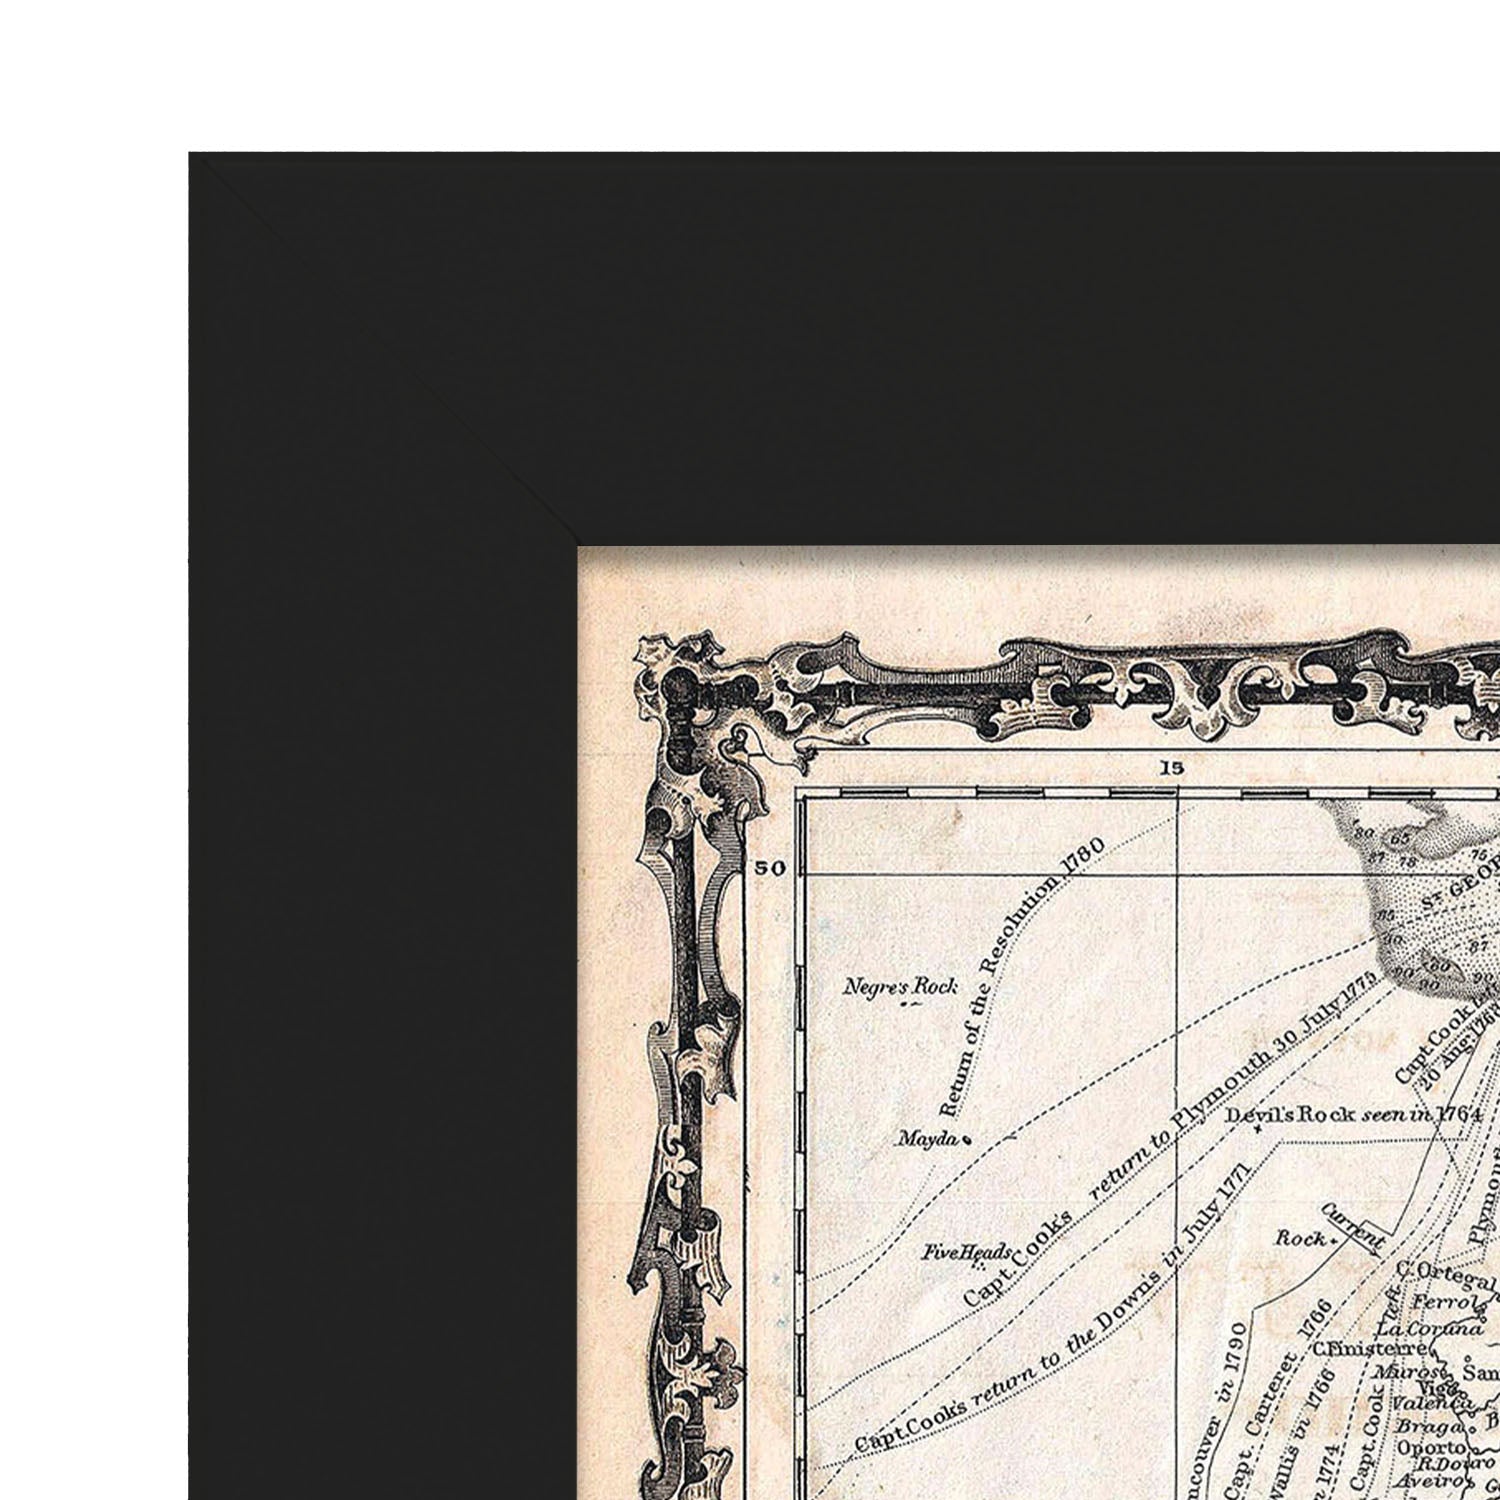 1862 Johnson Map of Africa Geographicus Afria johnson 1862-Artwork-Nacnic-Nacnic Estudio SL